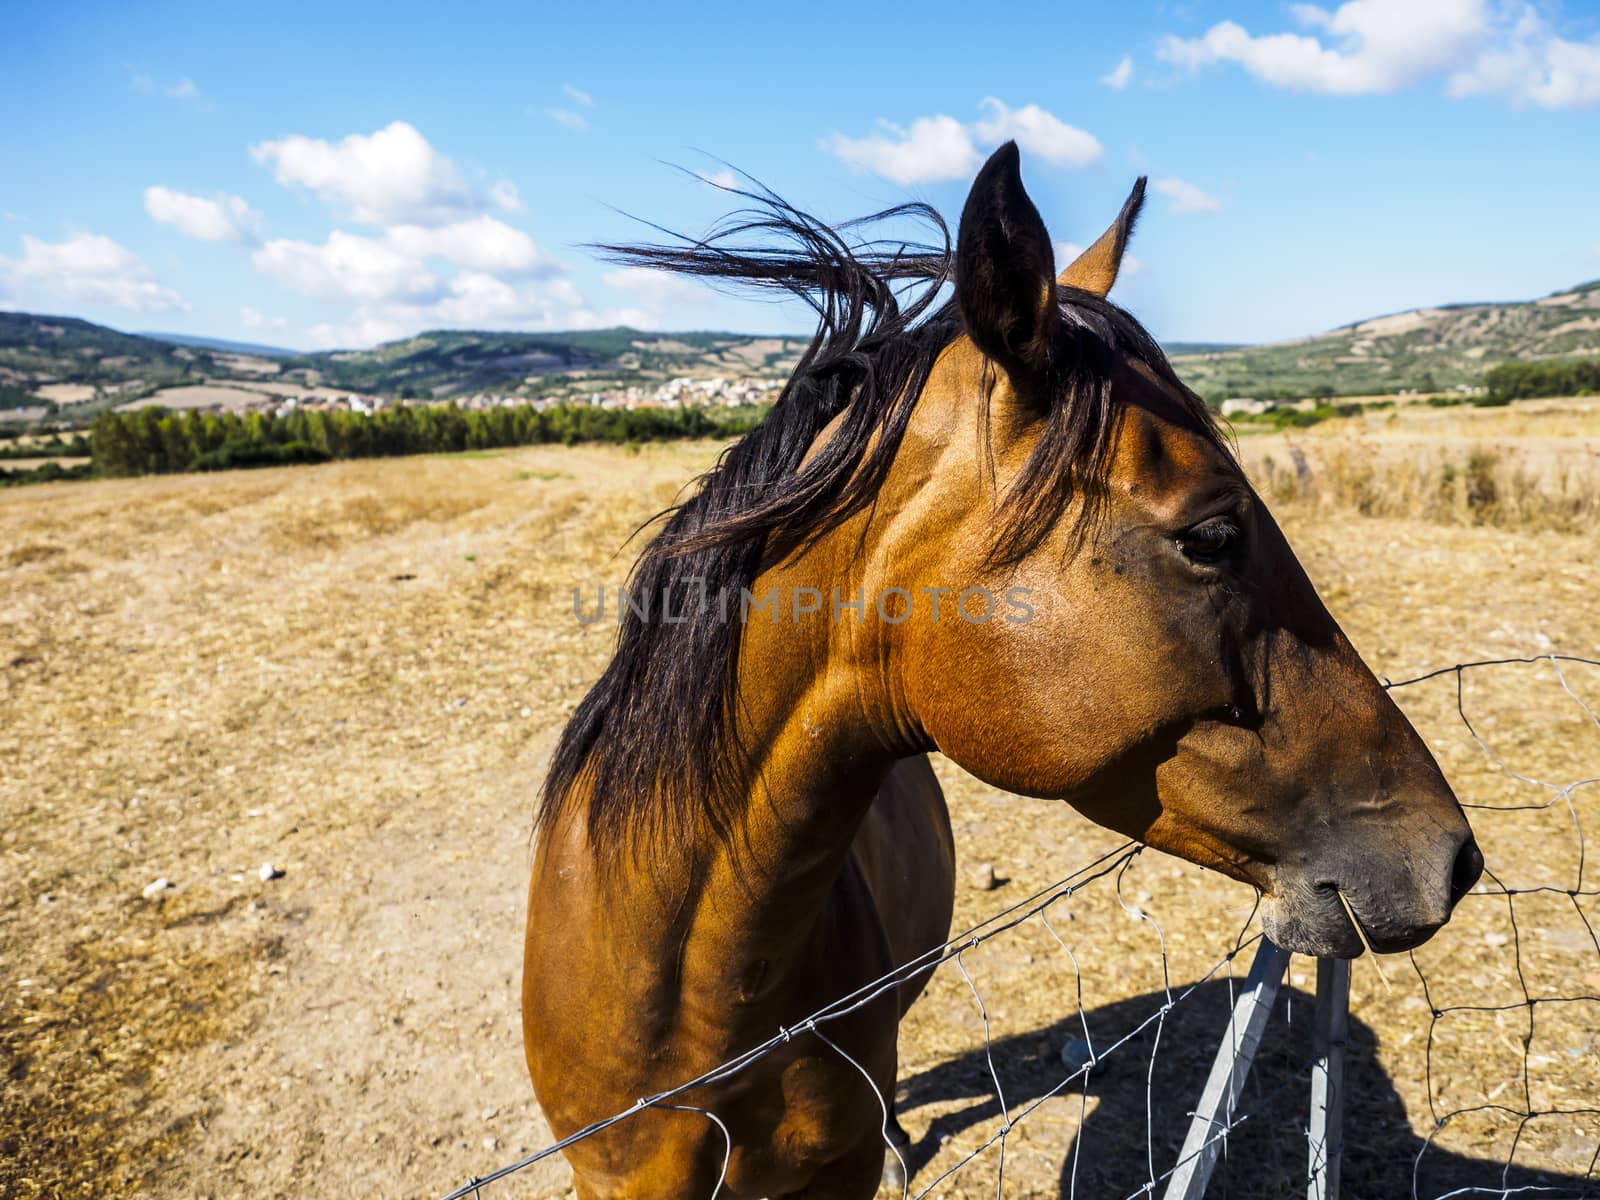 Italian horse while looking toward the lens